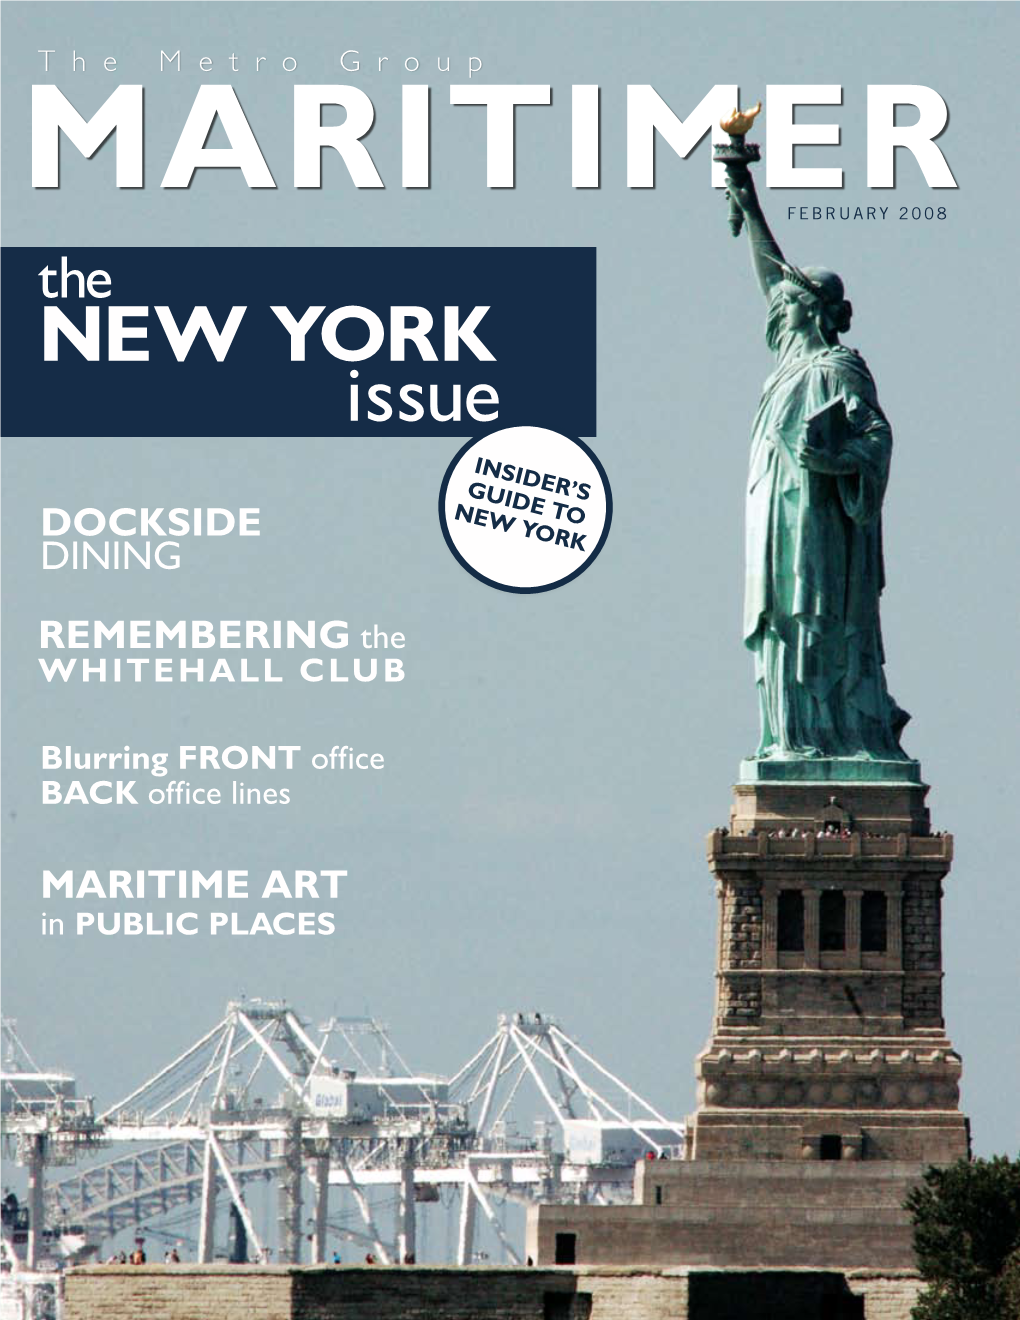 MARITIMER February 2008 the NEW YORK Issue Insider’S Guide to DOCKSIDE New York DINING